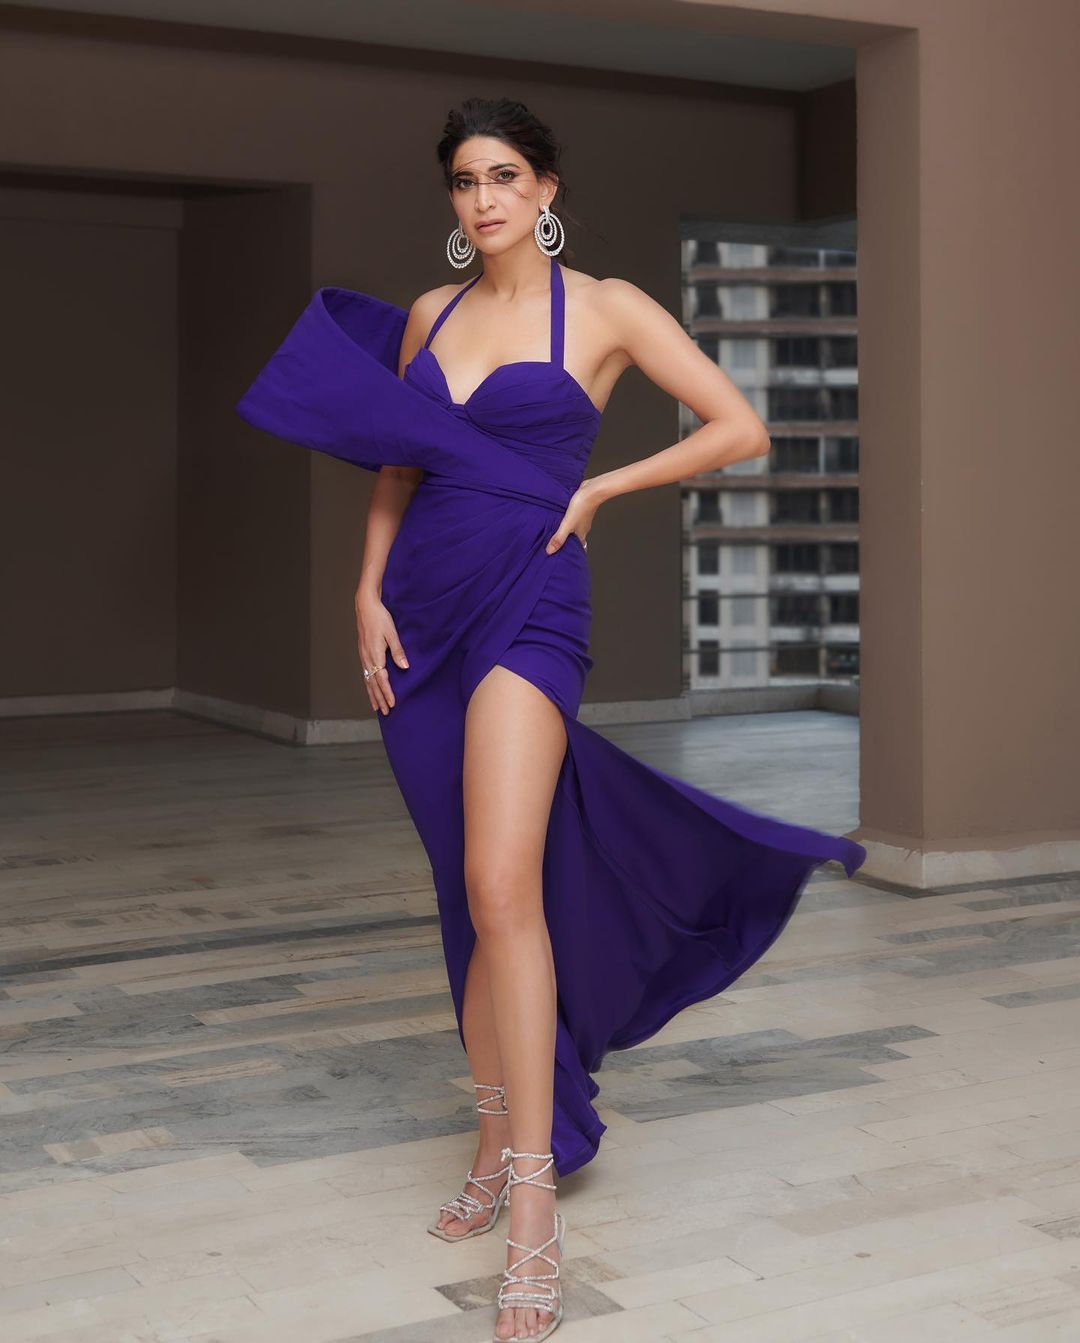 Aahana Kumra Makes Jaws Drop In Stylish Purple Dress, Check Out The ...